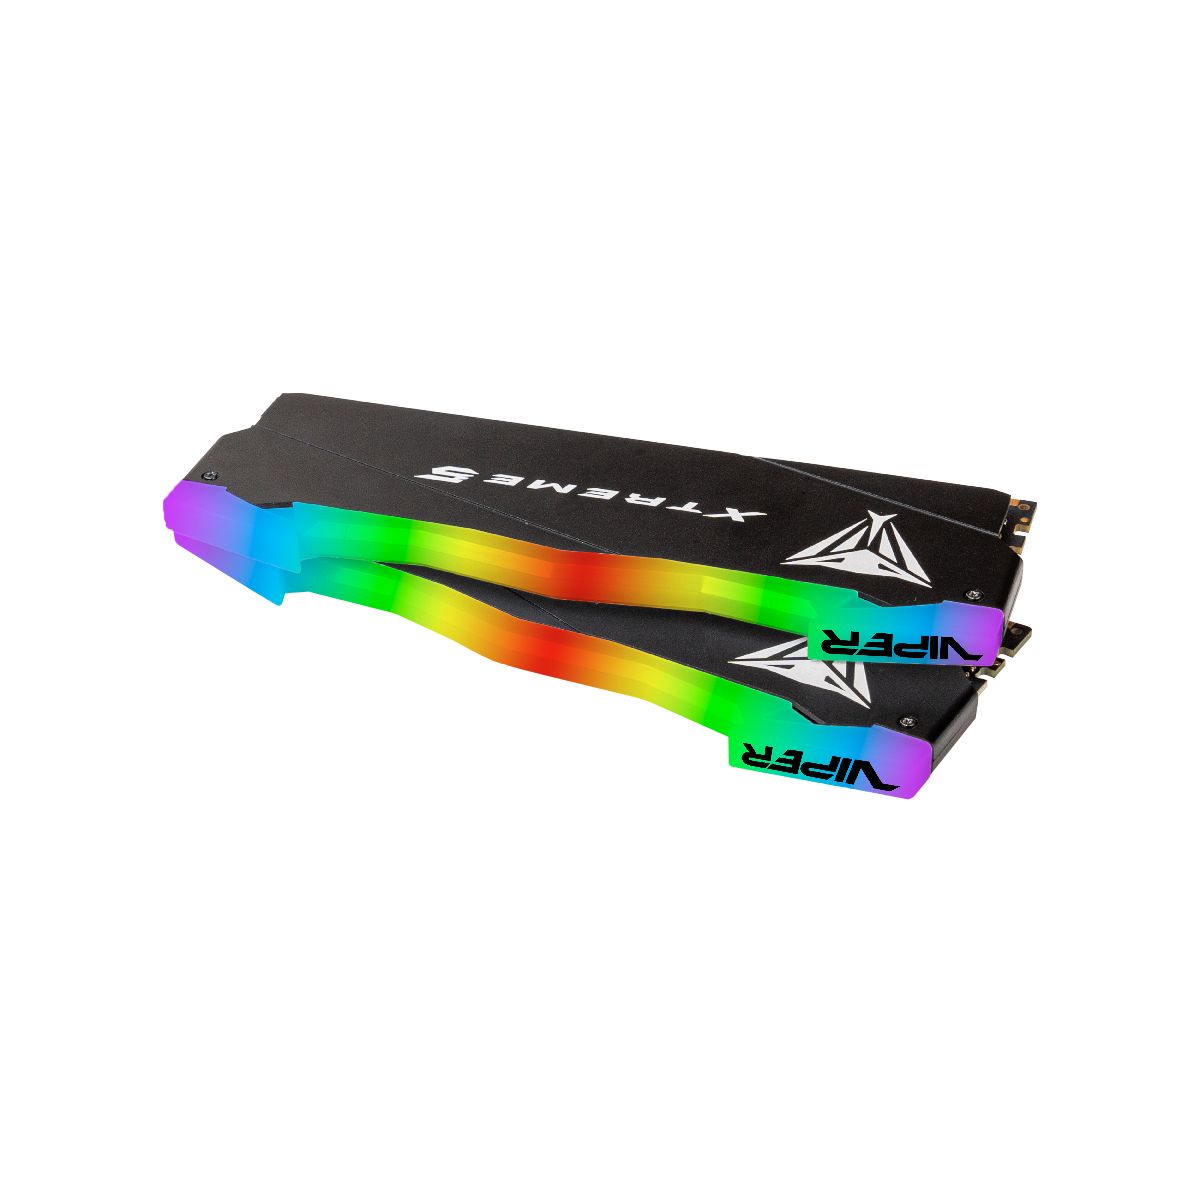 Patriot Viper Xtreme 5 RGB Series - DDR5 UDIMM PC5-62400 (7800MHz) CL38_Dual Kit